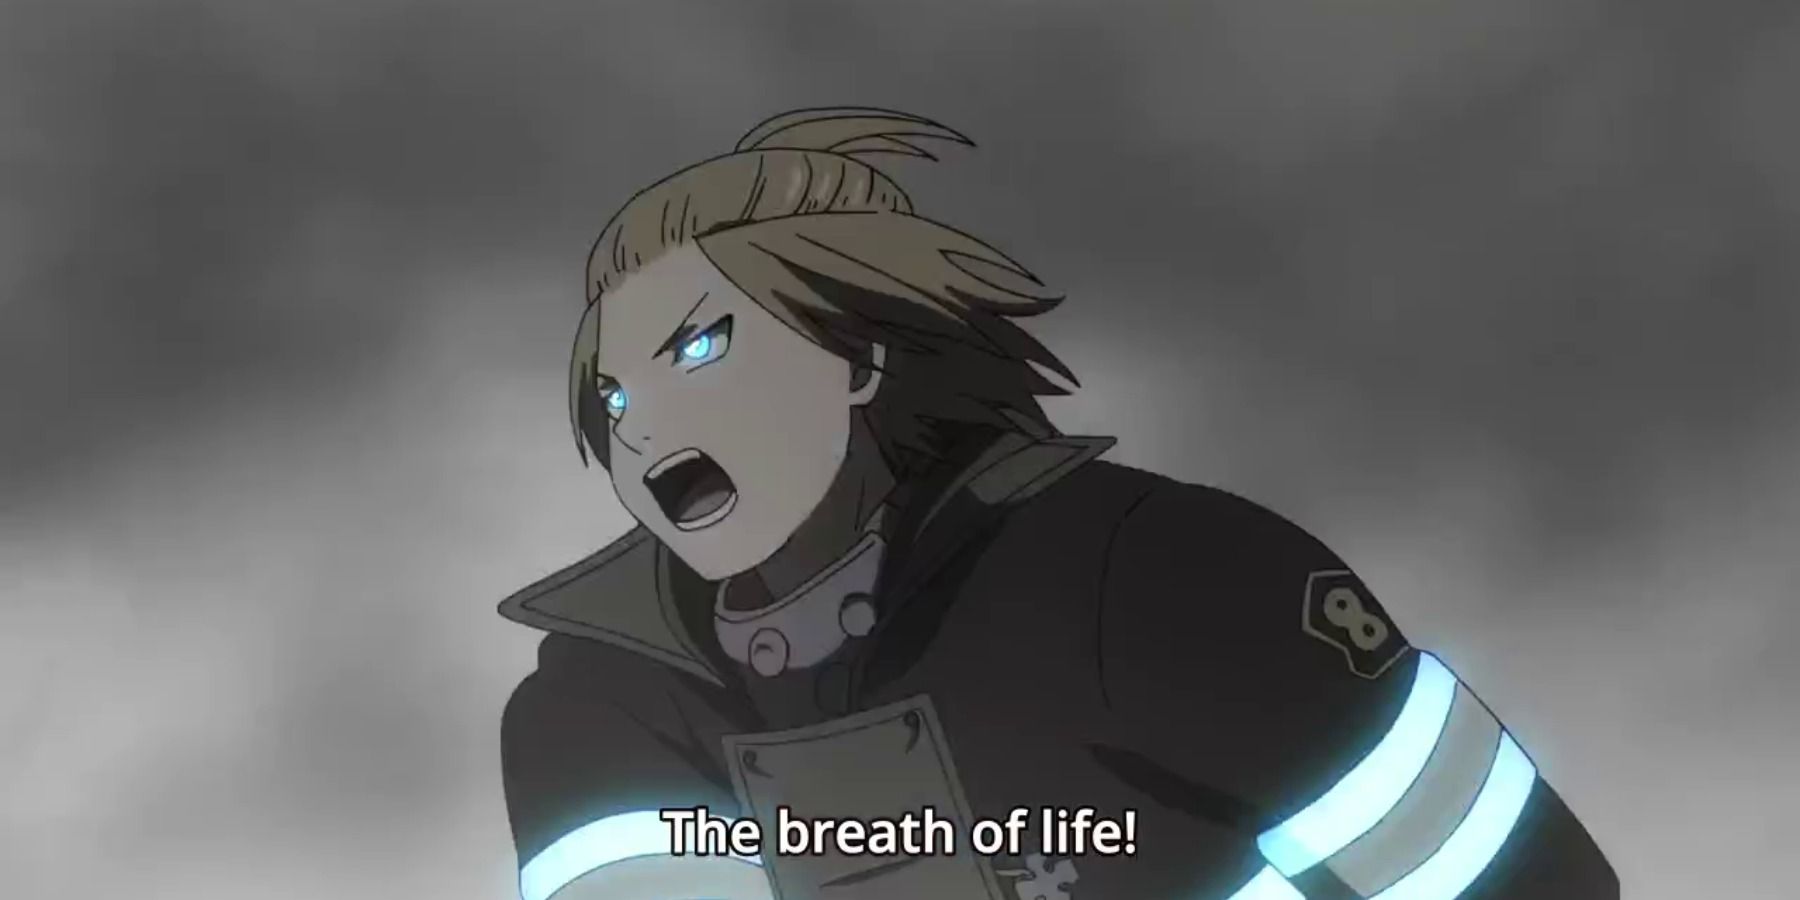 arthur using the breath of life